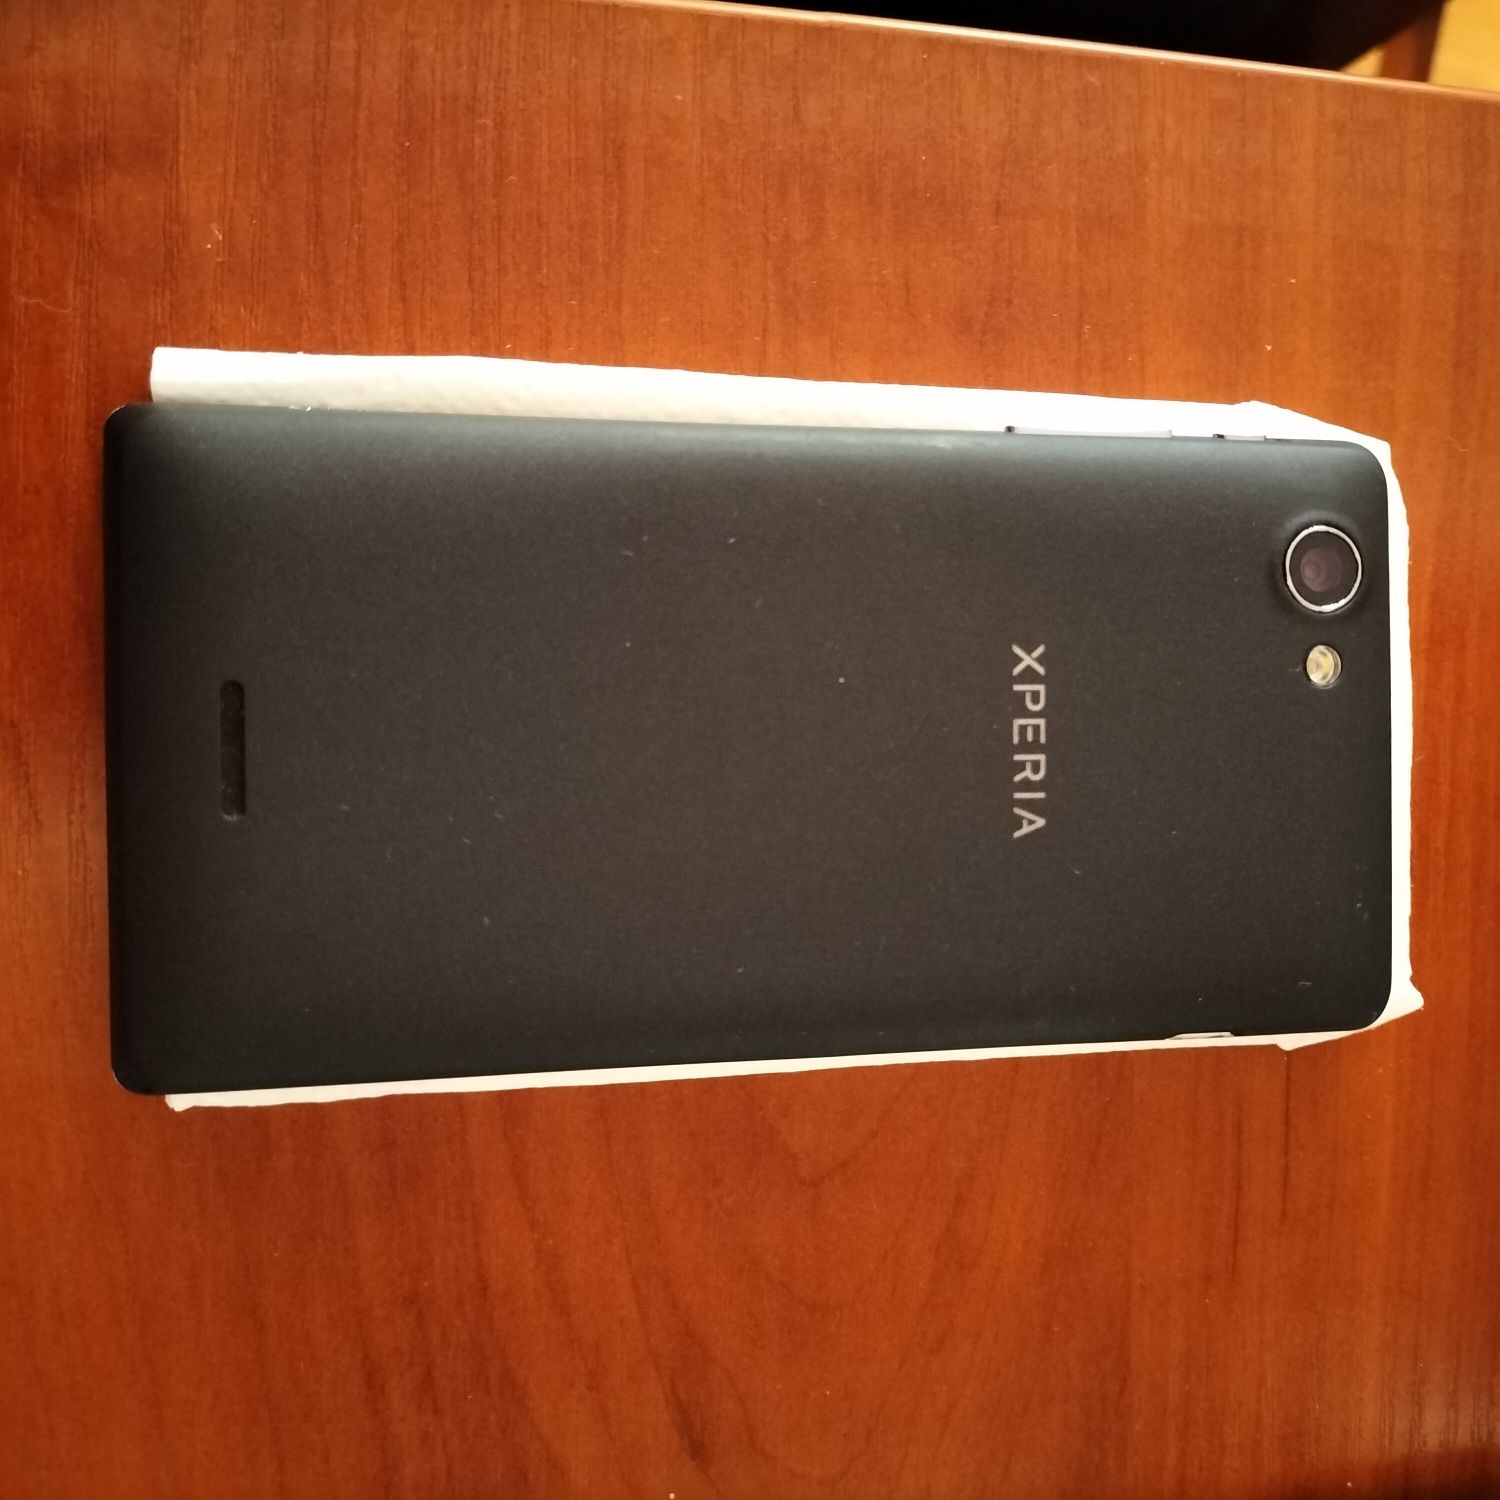 Smartfon Sony Xperia J